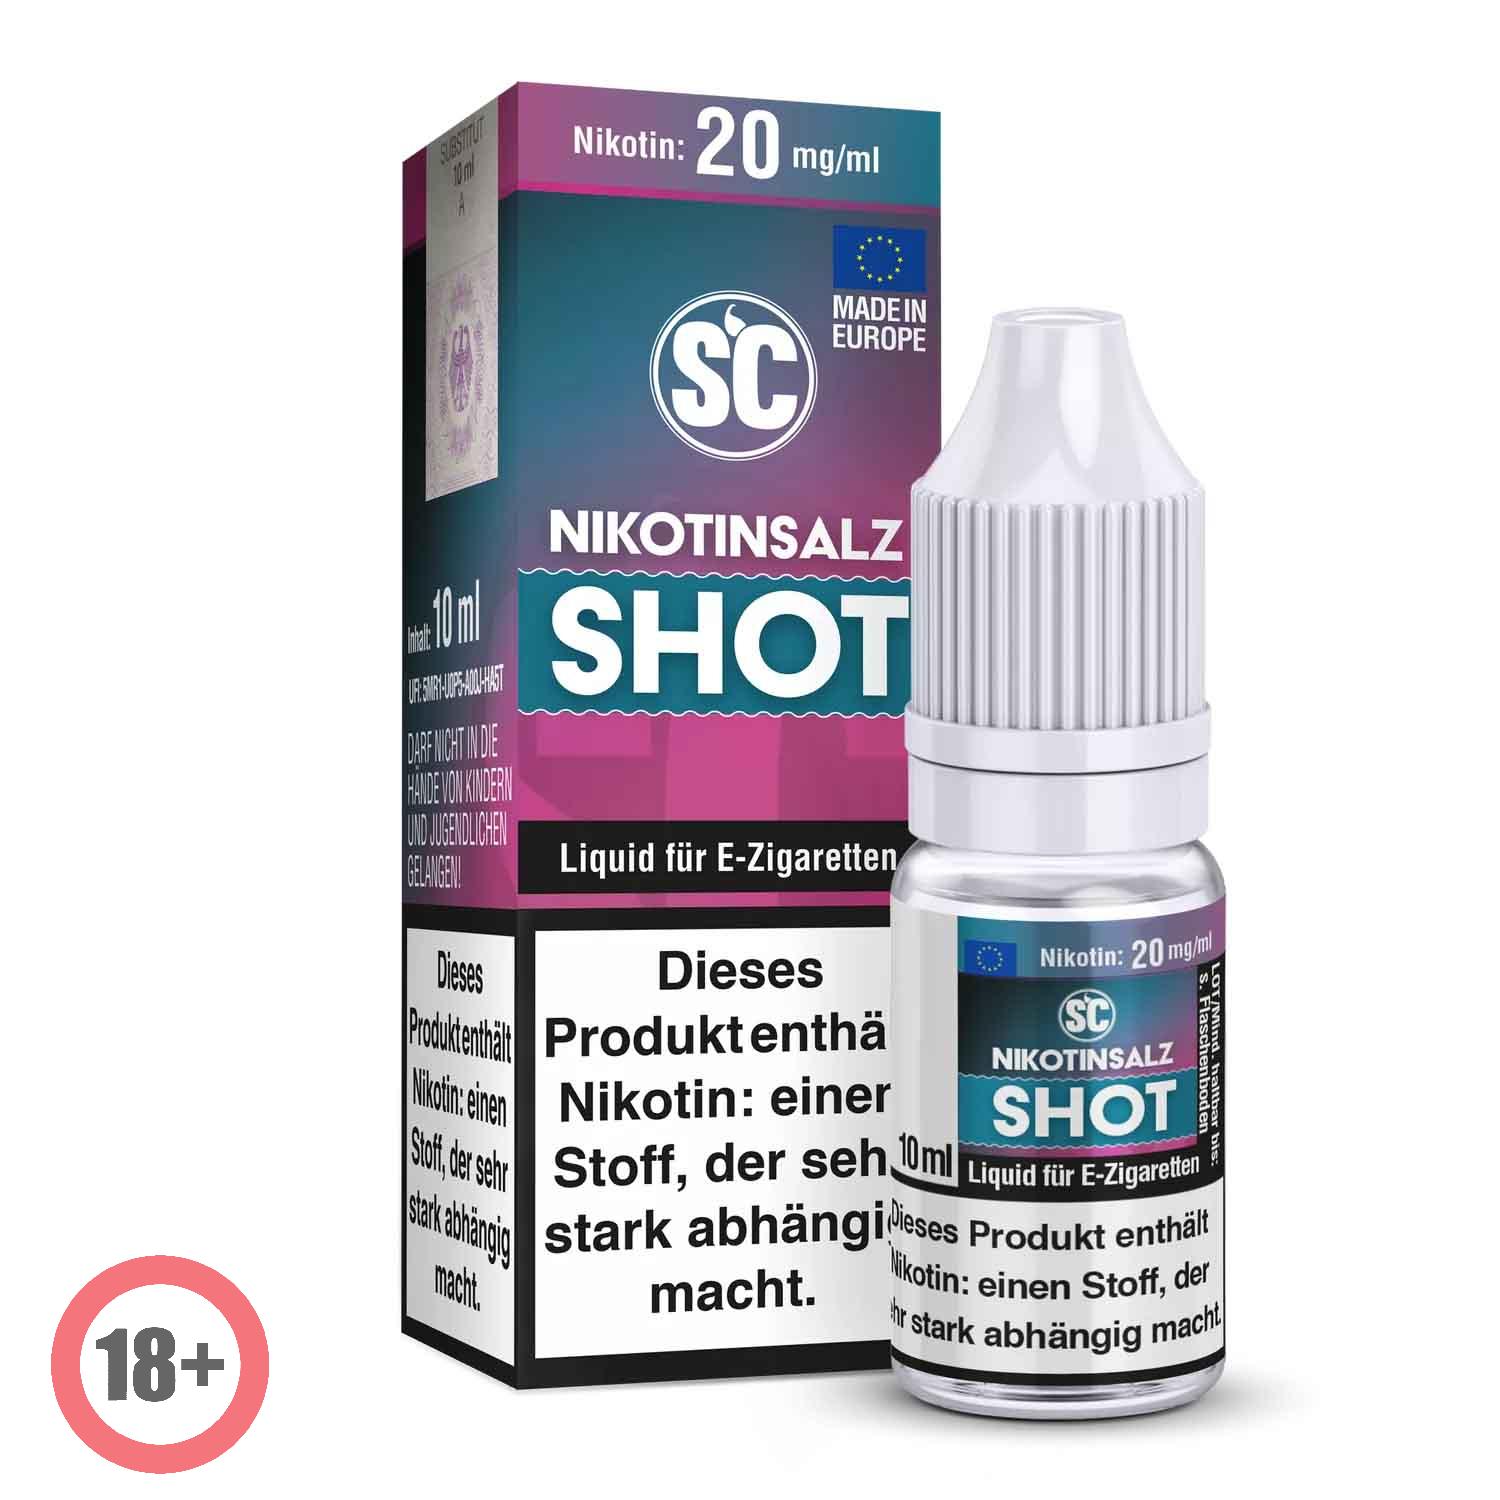 SC Nikotinsalz Shot ✅ Günstig kaufen! 